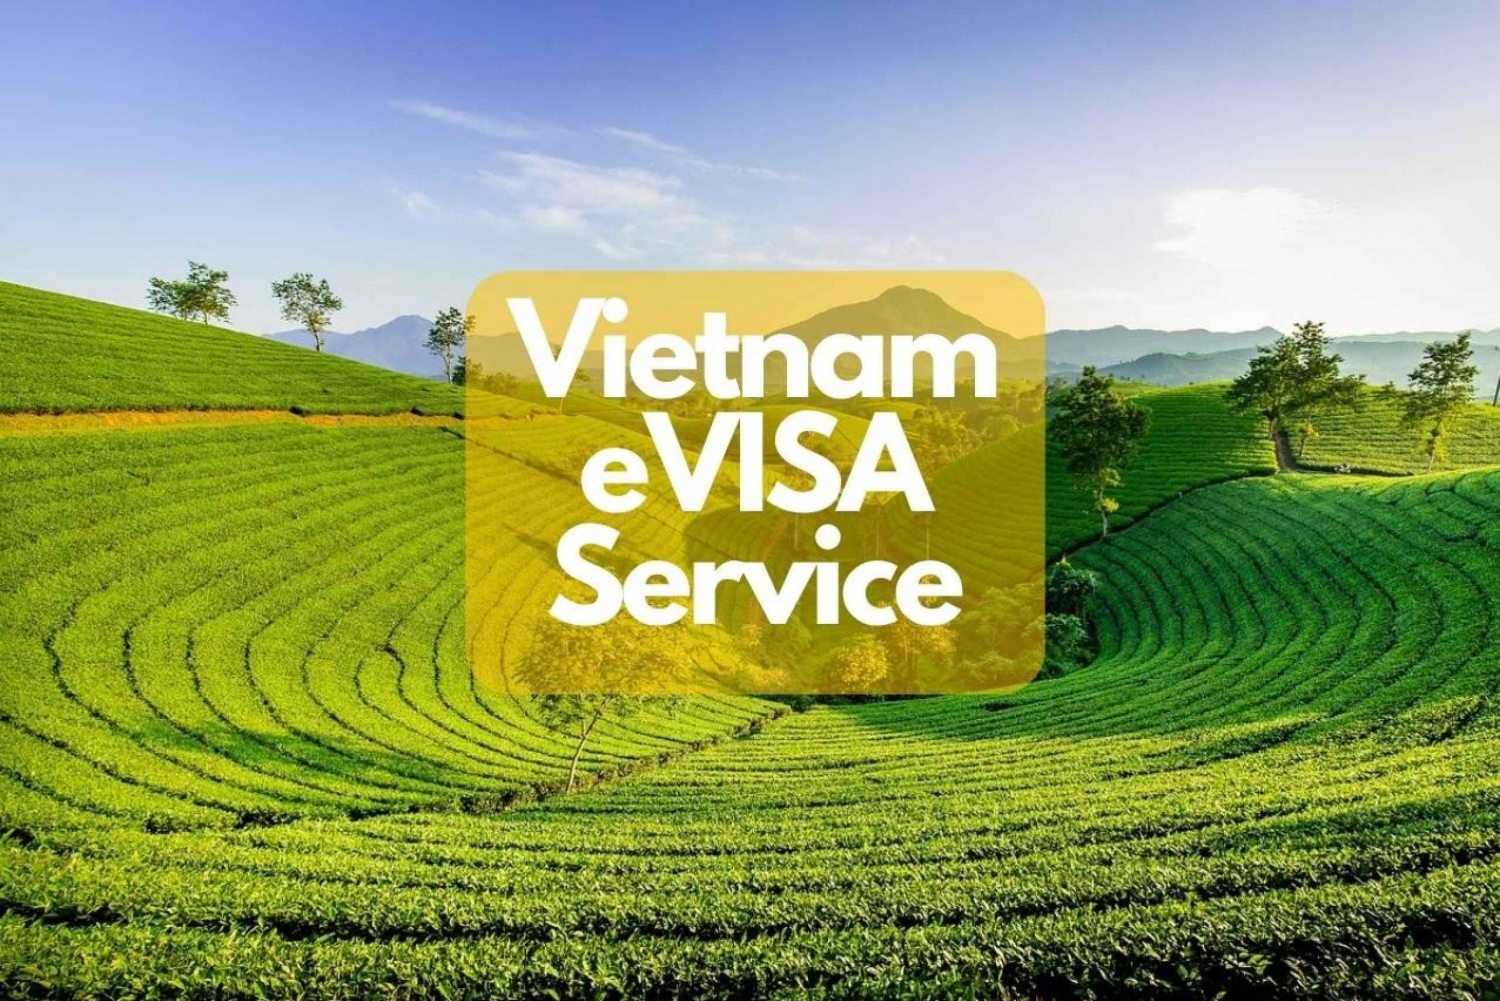 Vietnam E-Visa Service for International Travelers